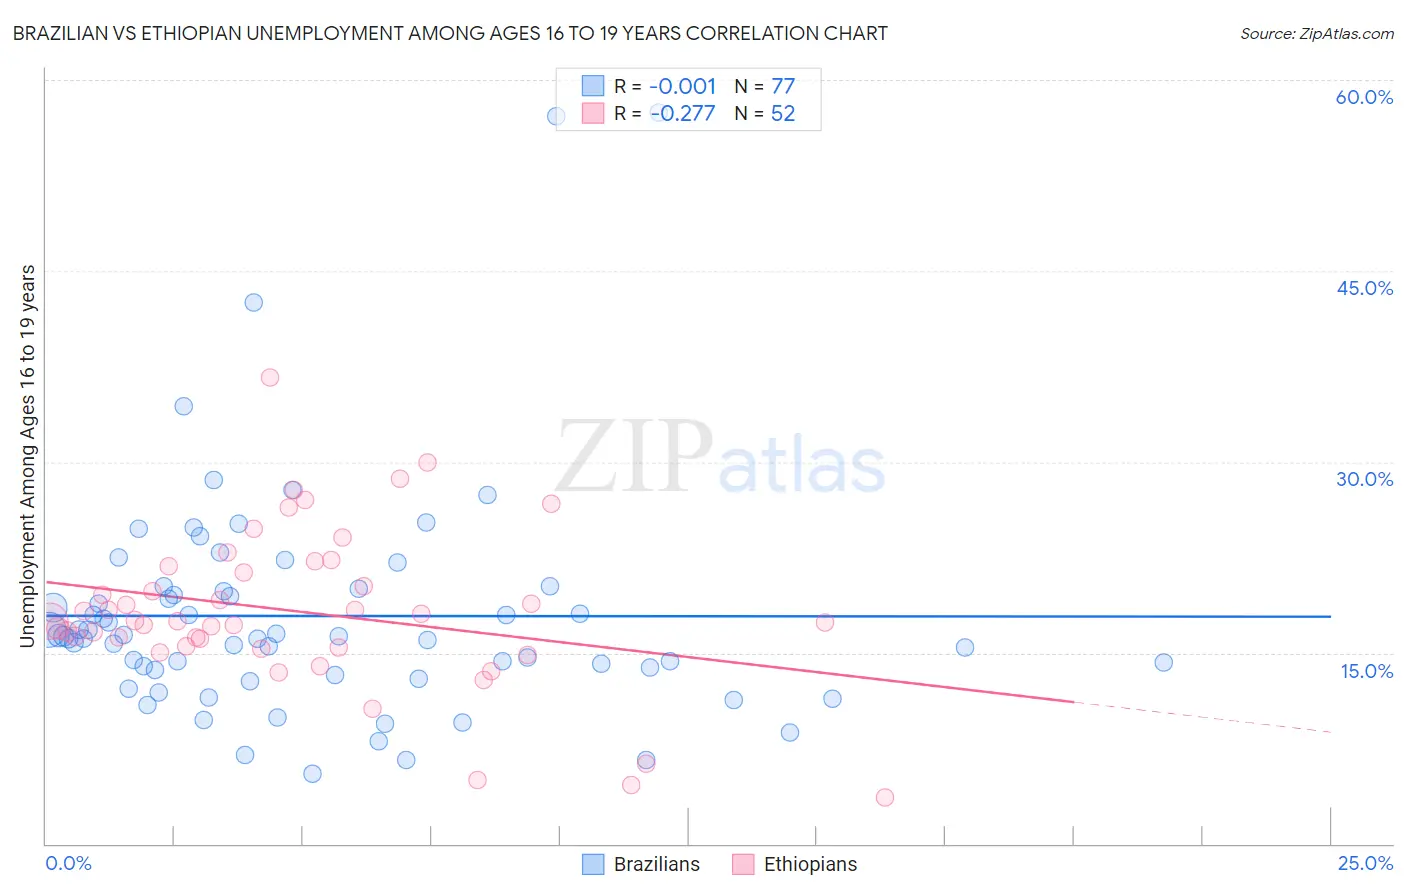 Brazilian vs Ethiopian Unemployment Among Ages 16 to 19 years